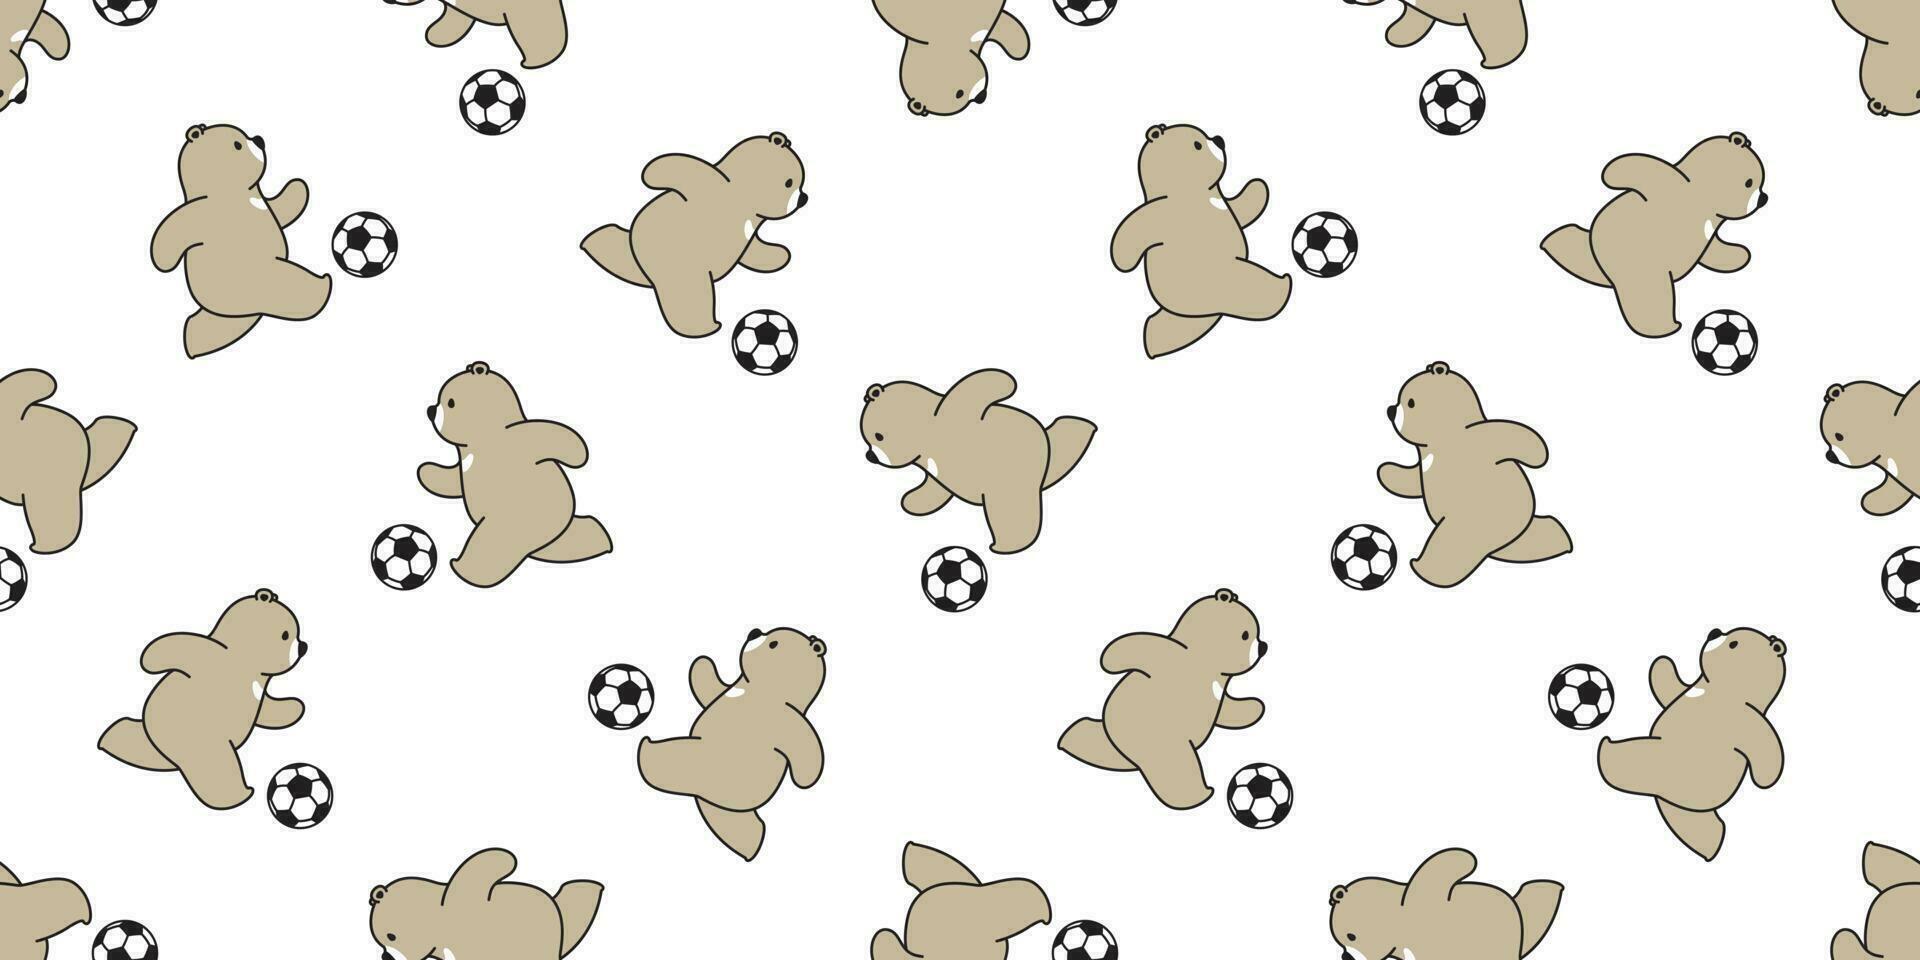 Bear seamless pattern vector polar bear soccer ball football sport scarf isolated cartoon illustration tile background repeat wallpaper